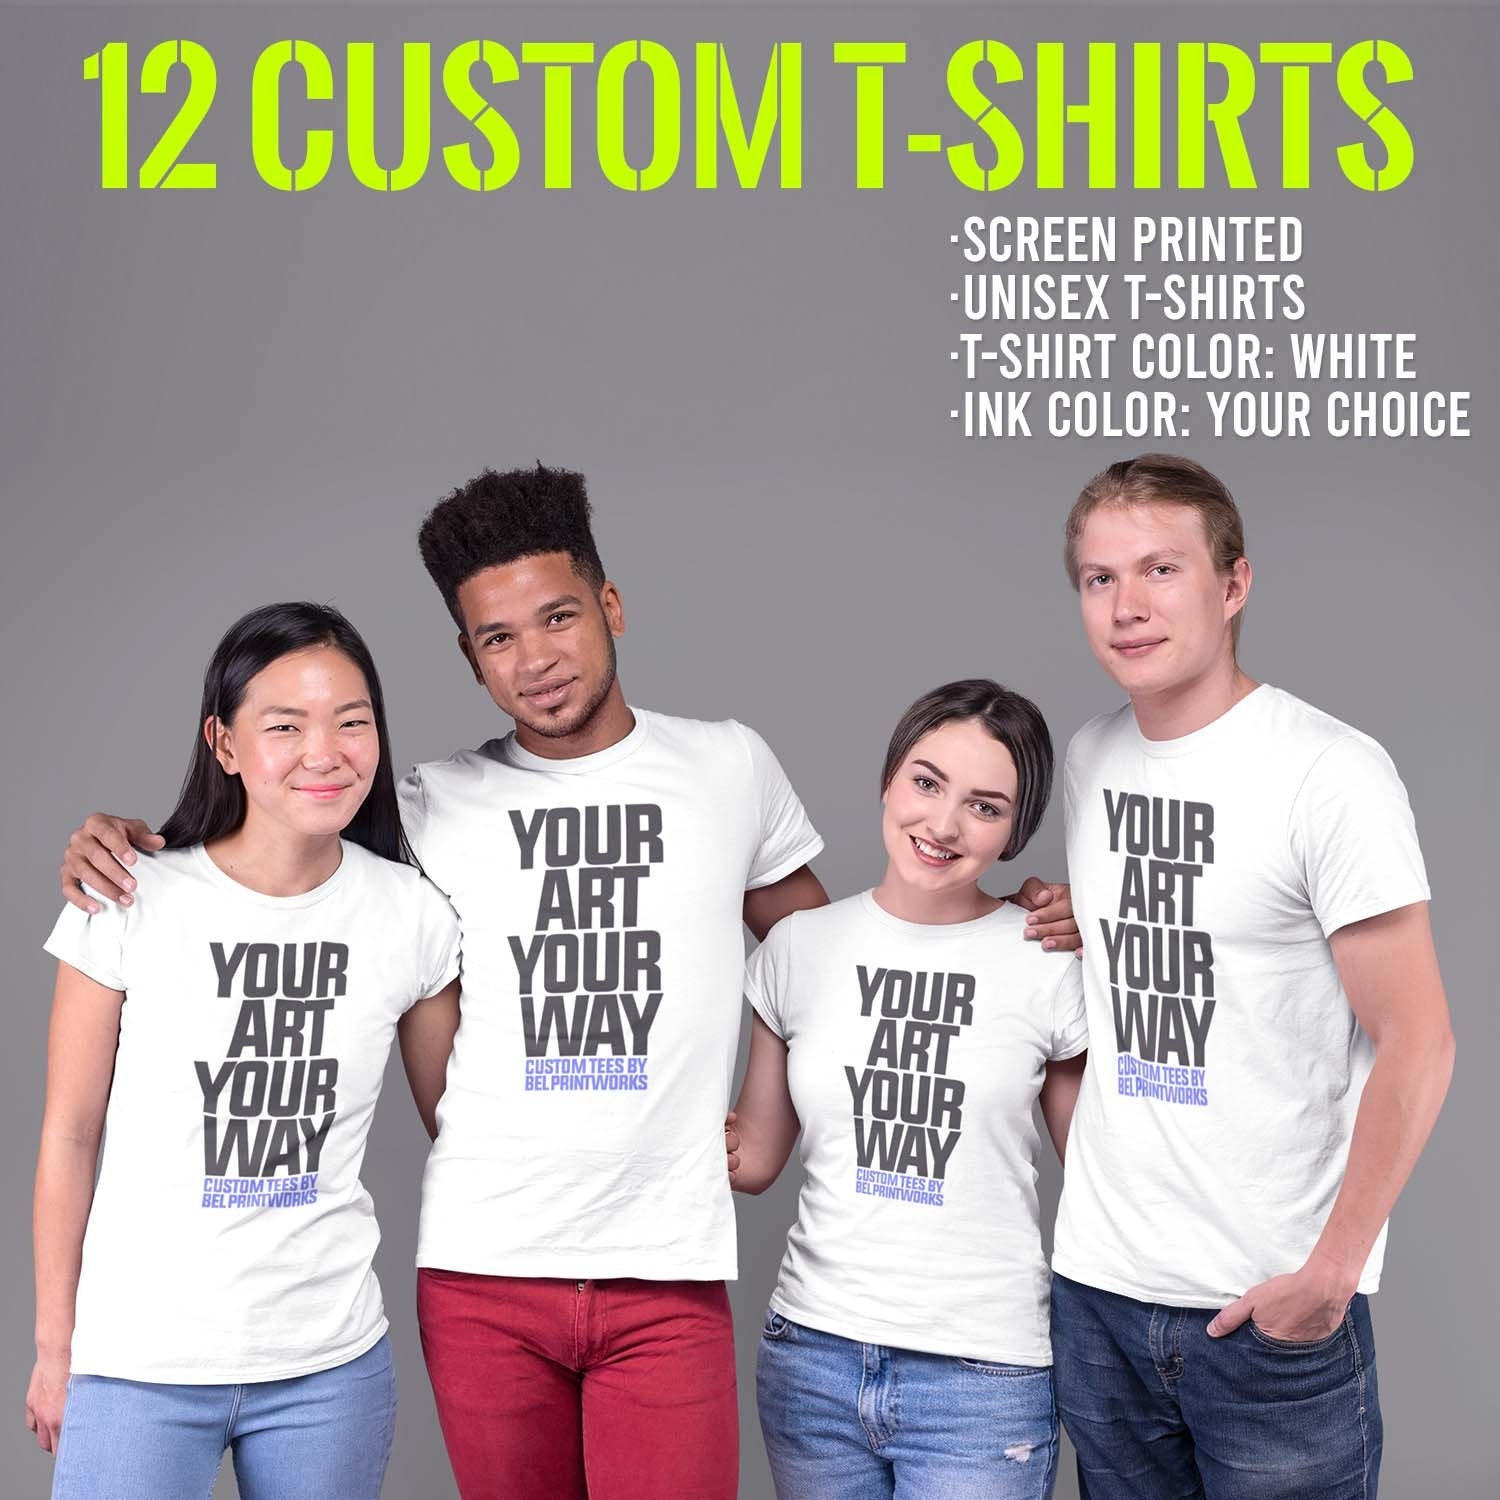 12 Customized T-shirts Screen Printed 1 Dozen Personalized -